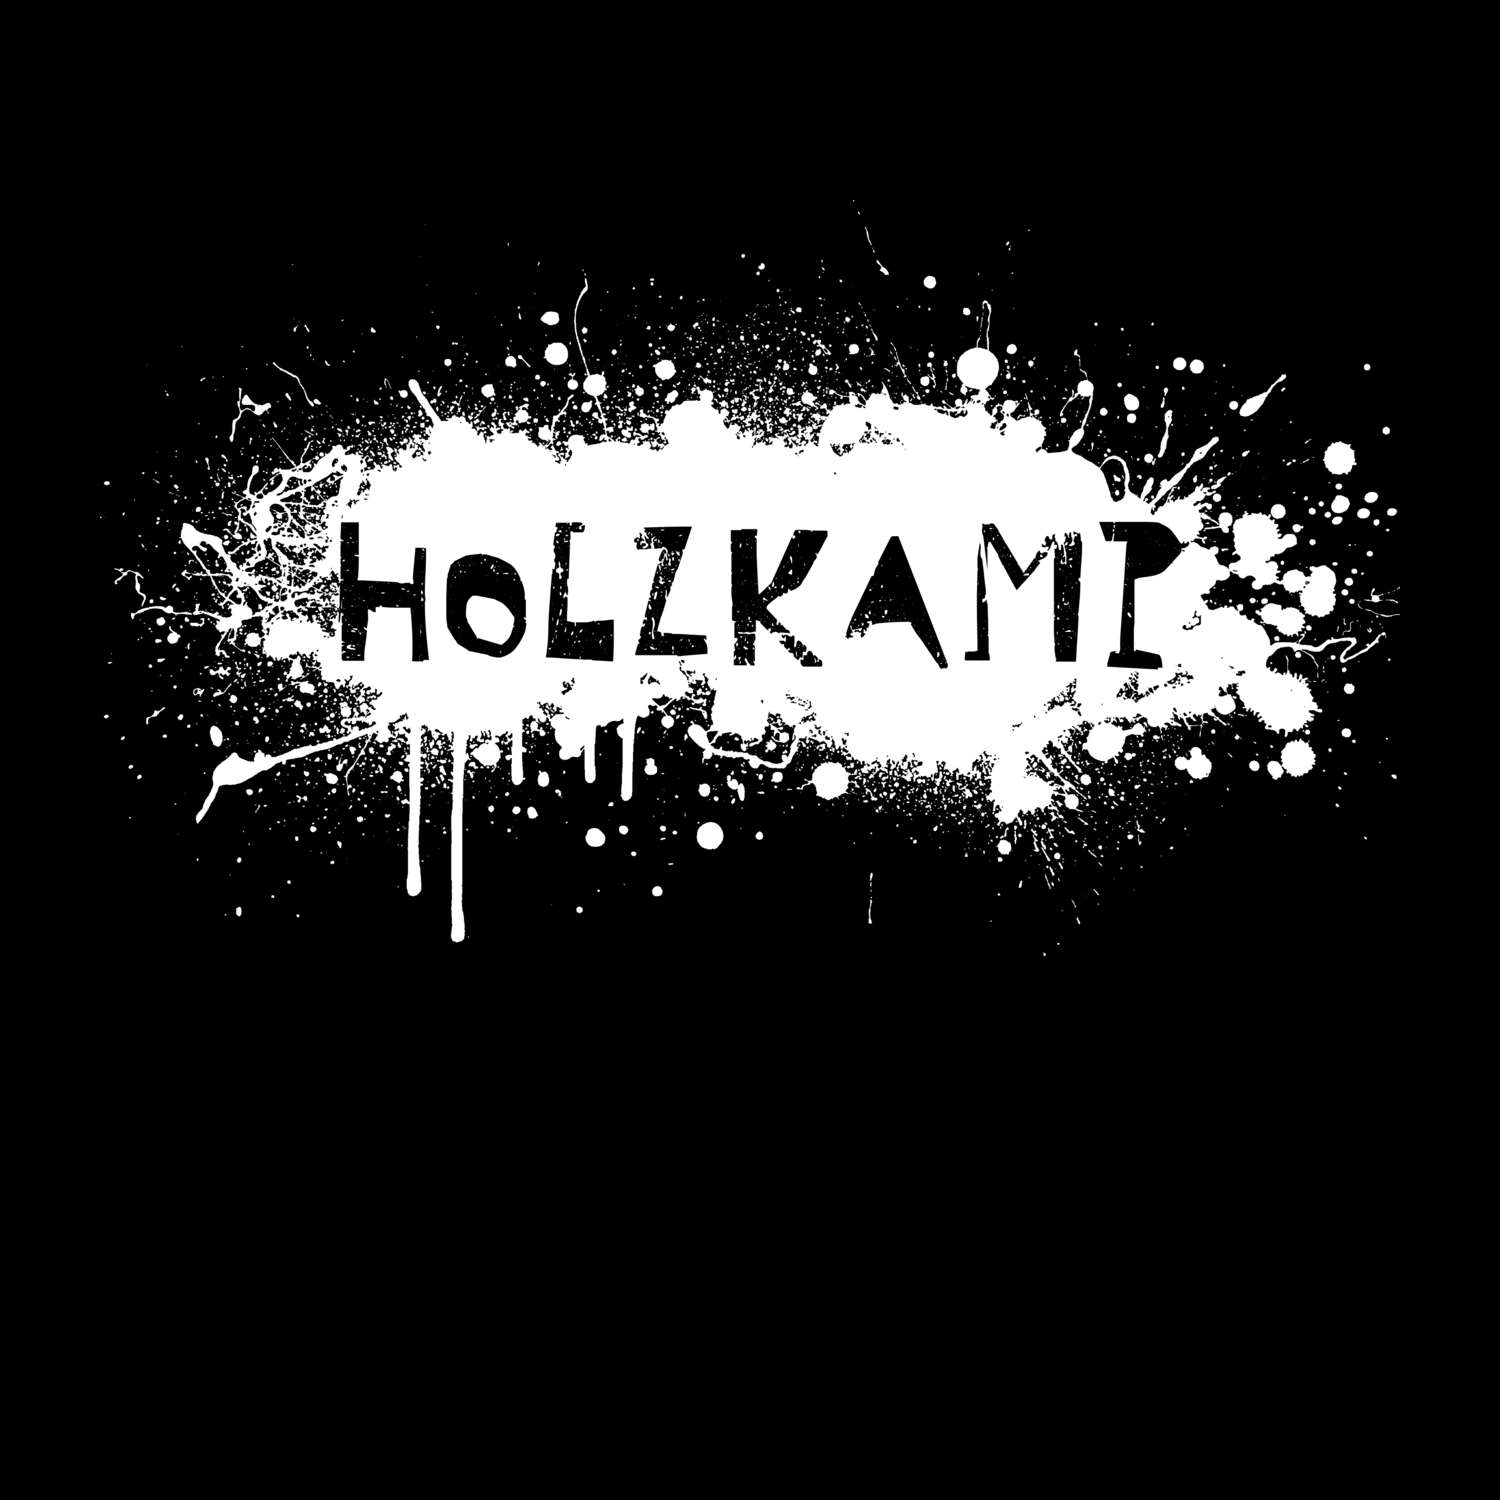 Holzkamp T-Shirt »Paint Splash Punk«